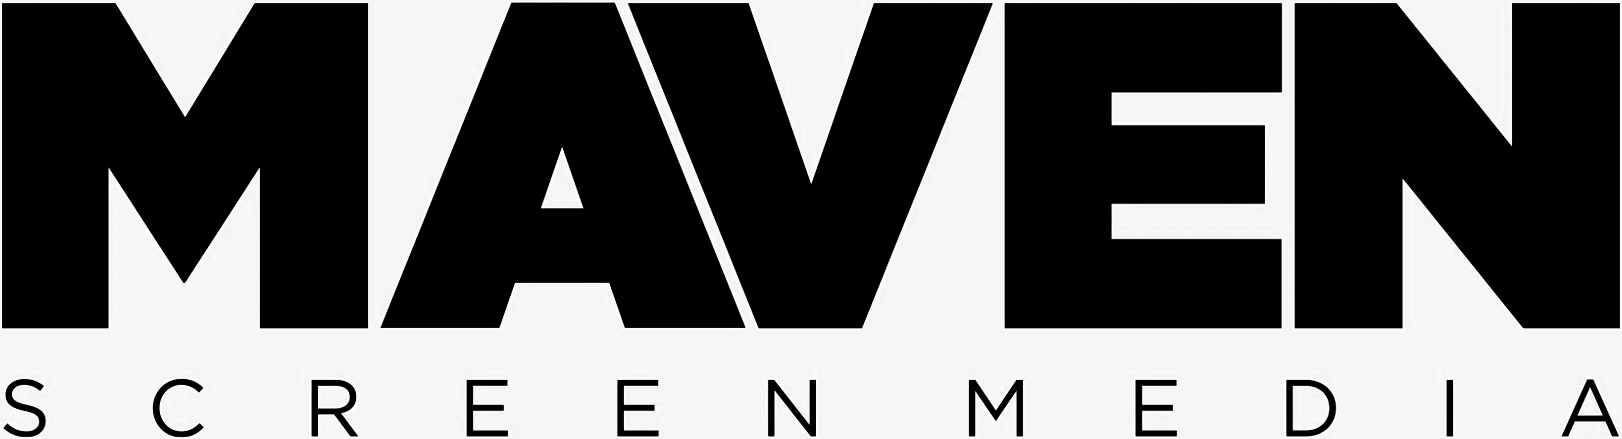 Maven Screen Media - company